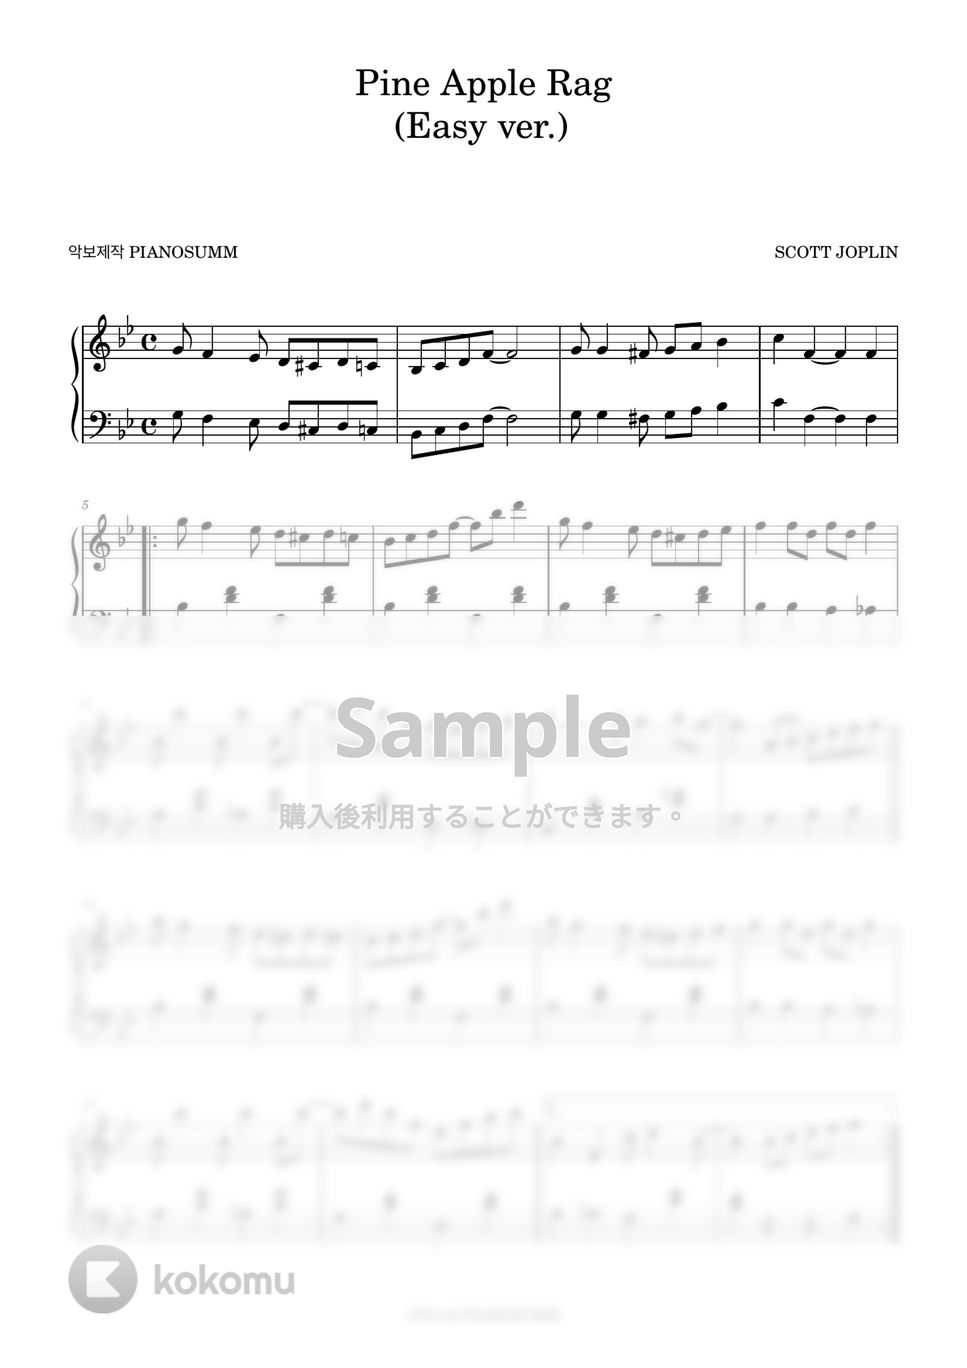 Scott Joplin - PineApple Rag (Easy ver.) by PIANOSUMM